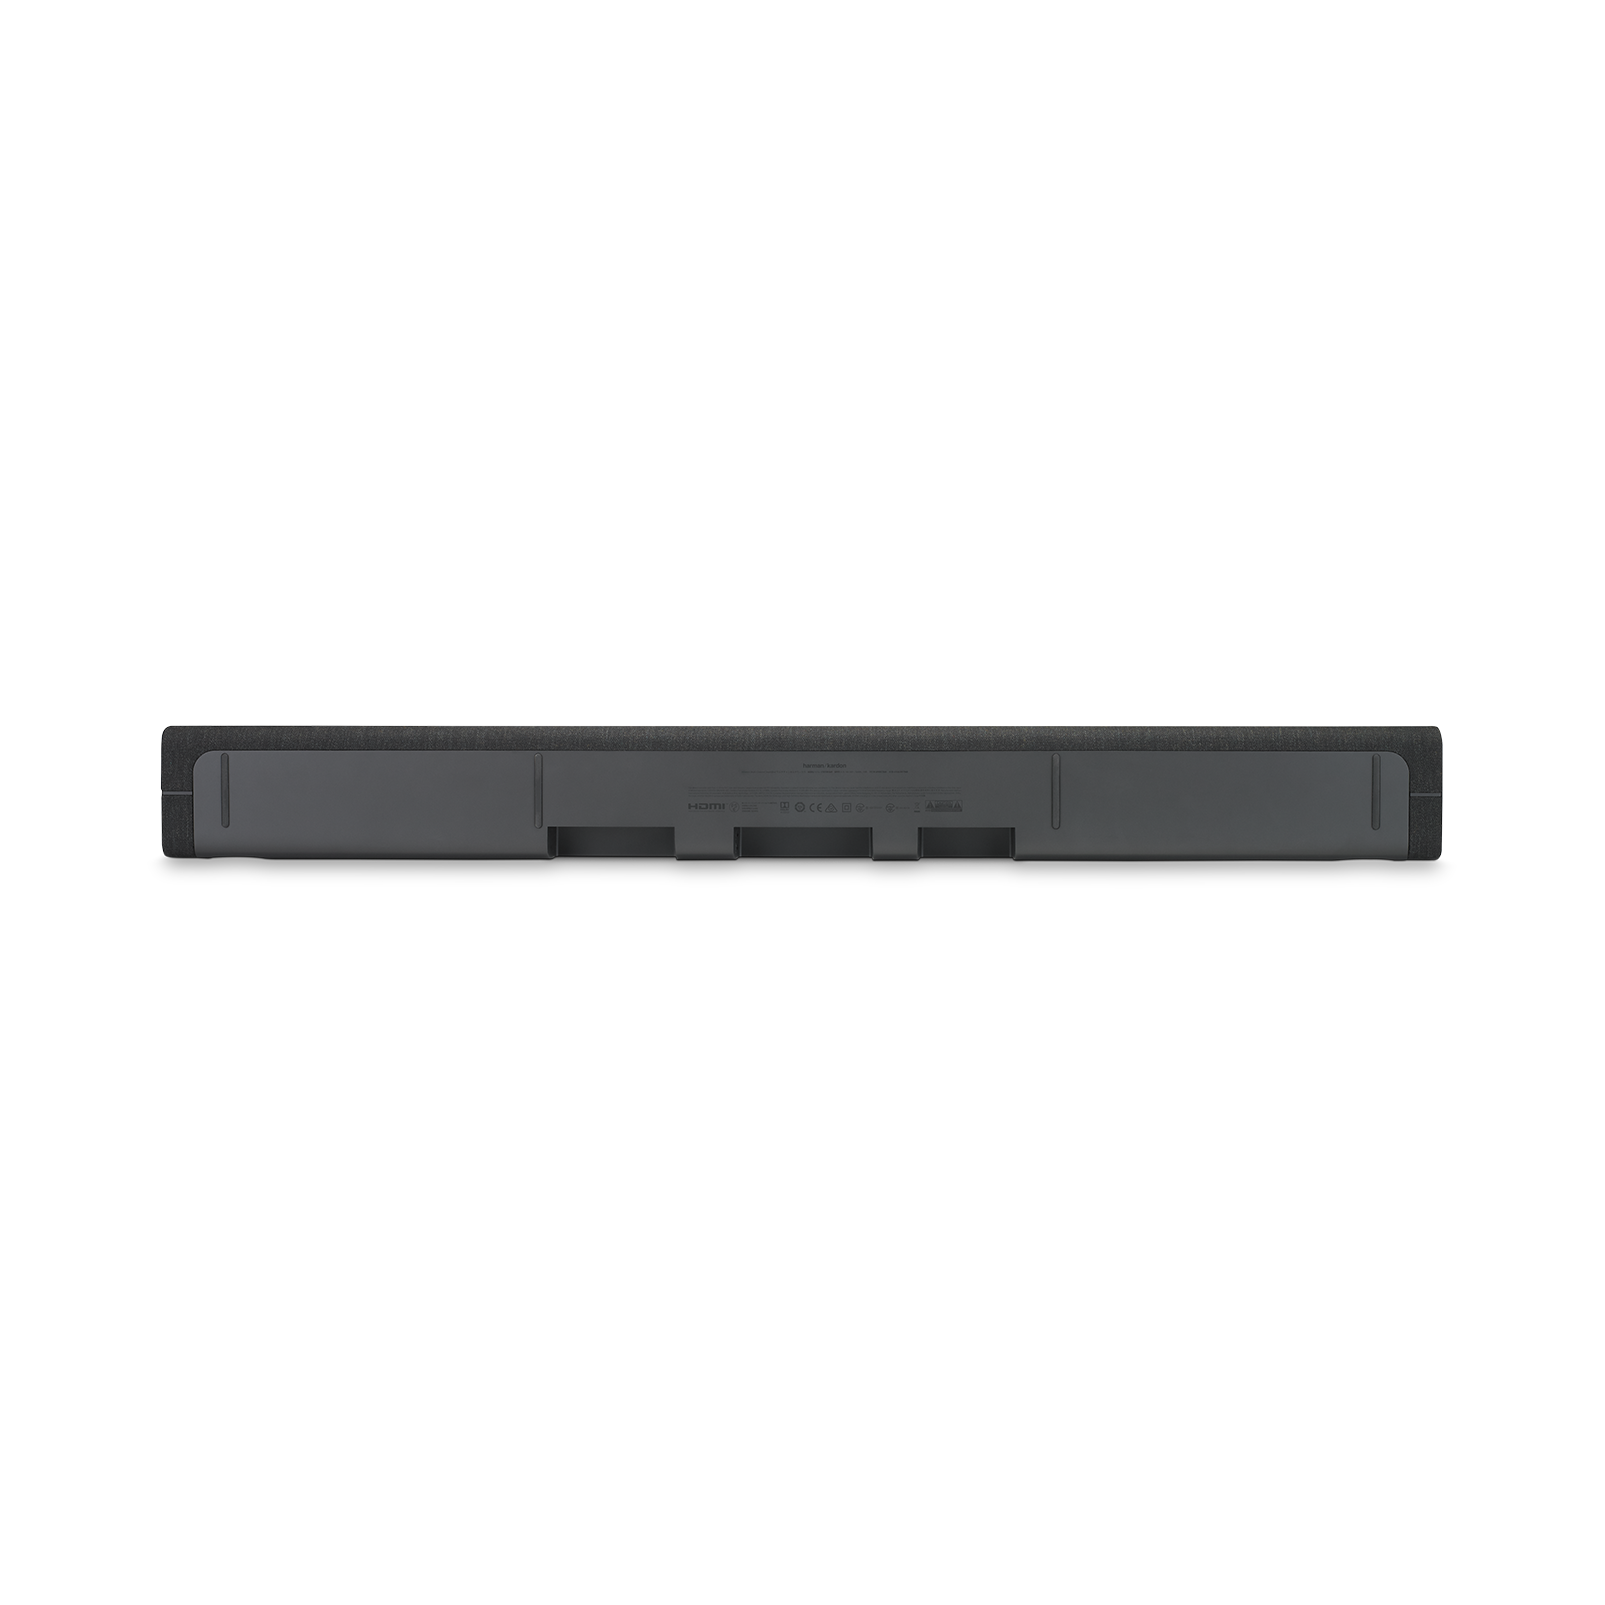 Harman Kardon Citation Bar - Black - The smartest soundbar for movies and music - Detailshot 2